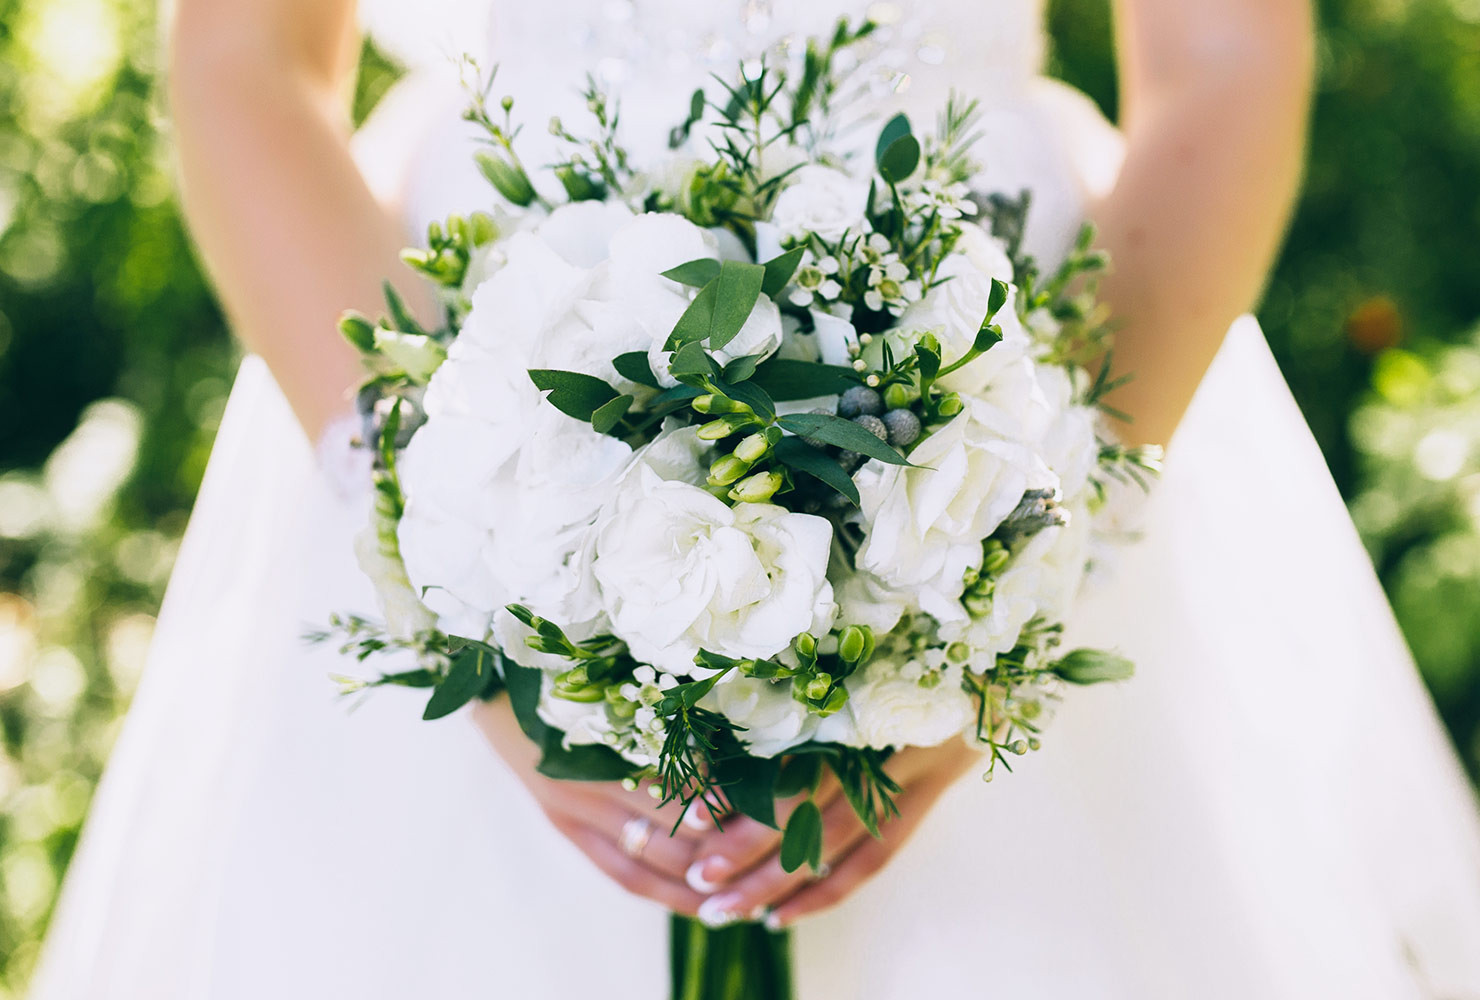 Popular Wedding Flowers
 The 15 Most Popular Wedding Flowers In 2019